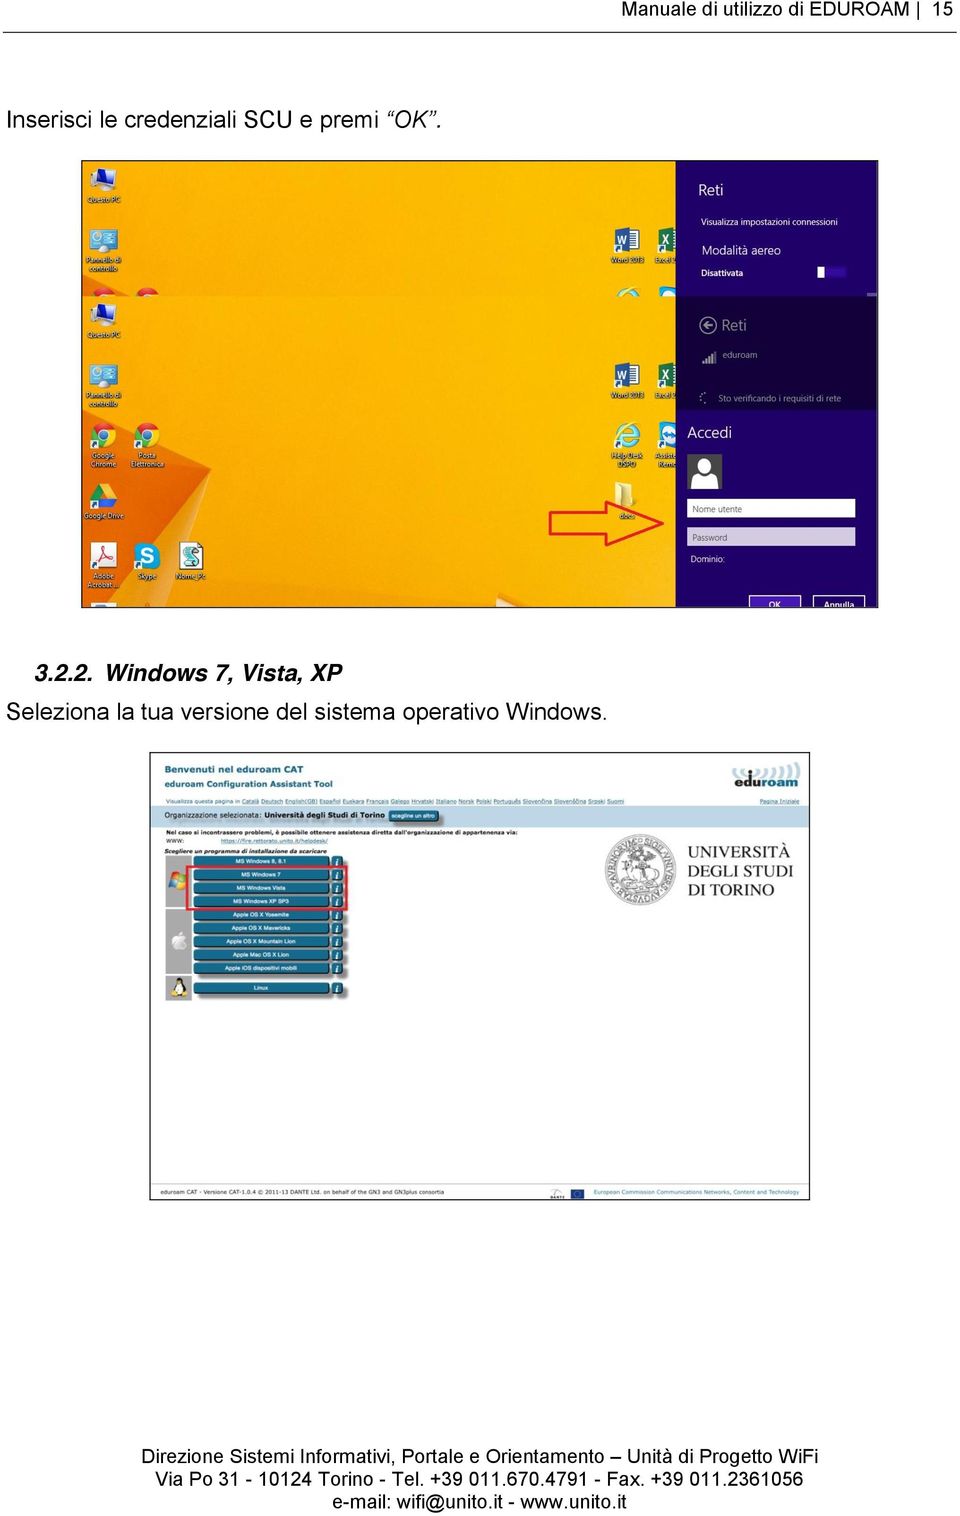 3.2.2. Windows 7, Vista, XP Seleziona